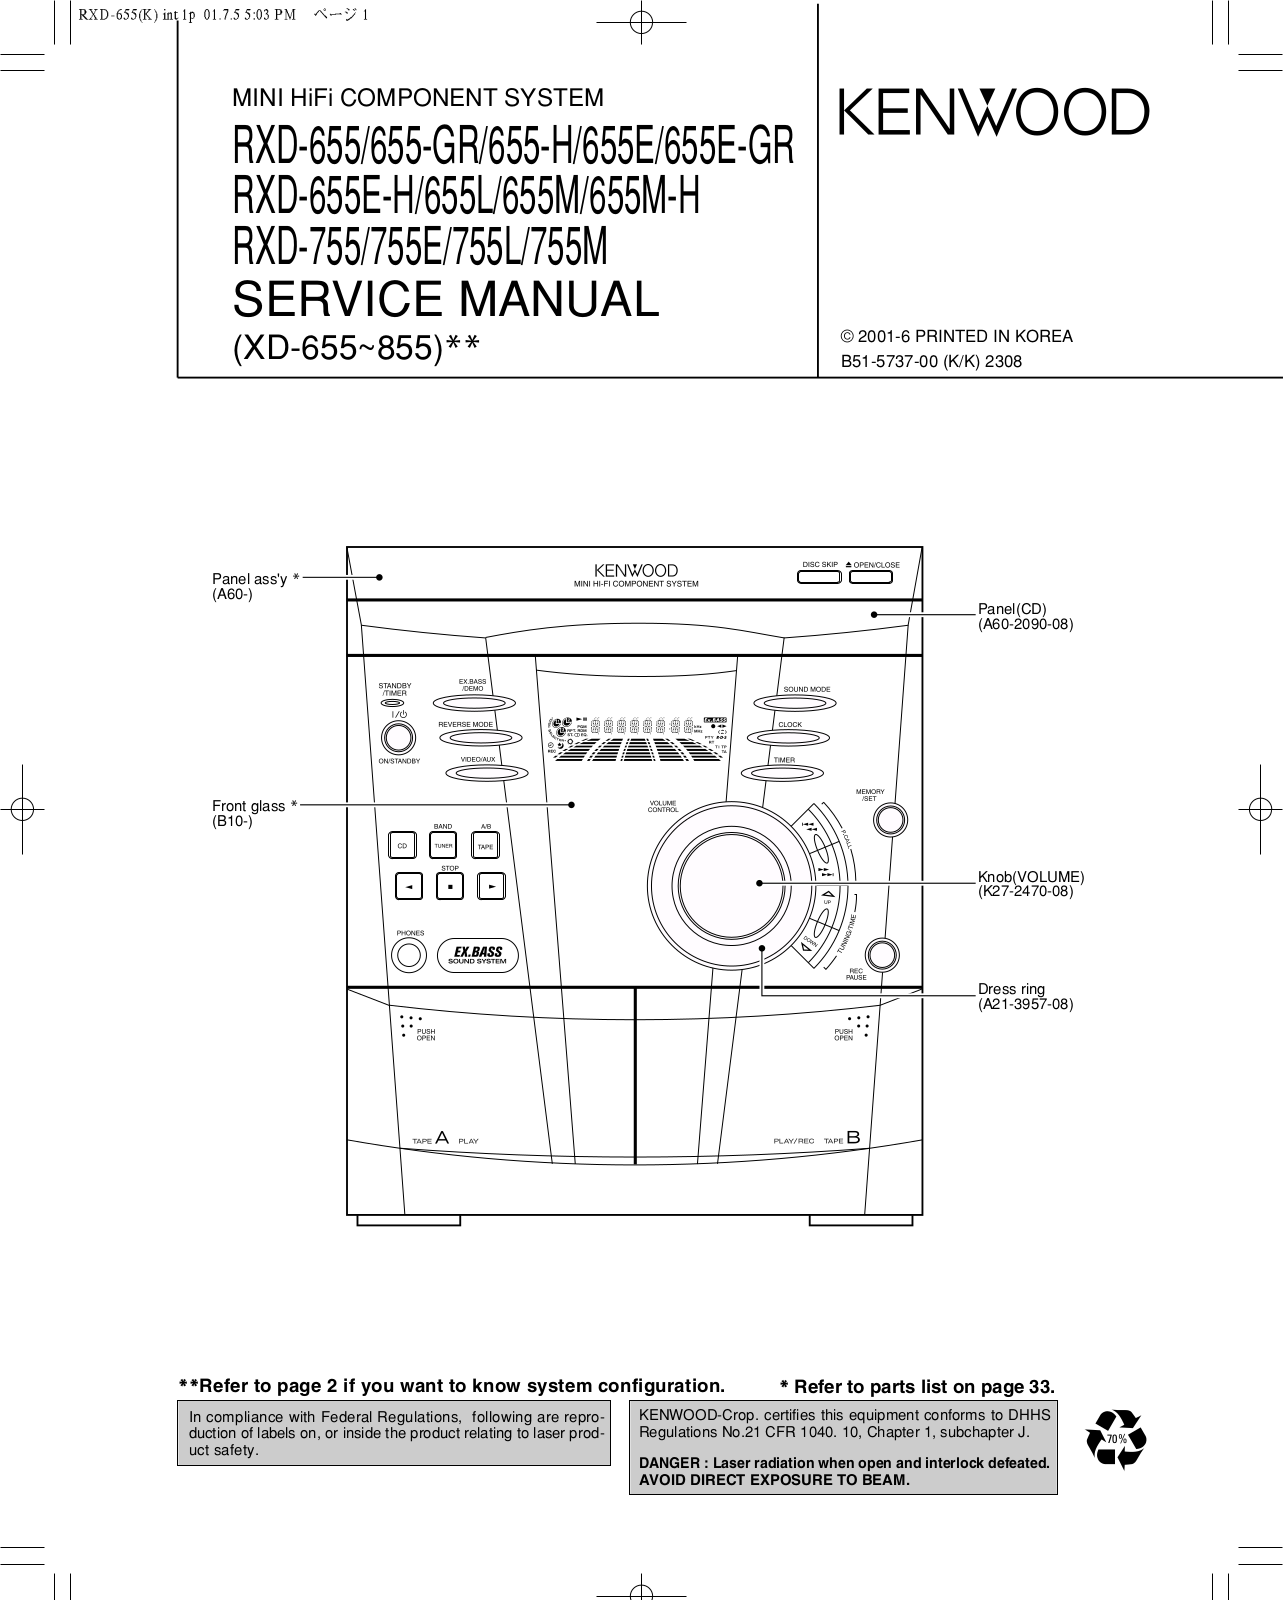 Kenwood RXD-655, RXD-755 Service manual